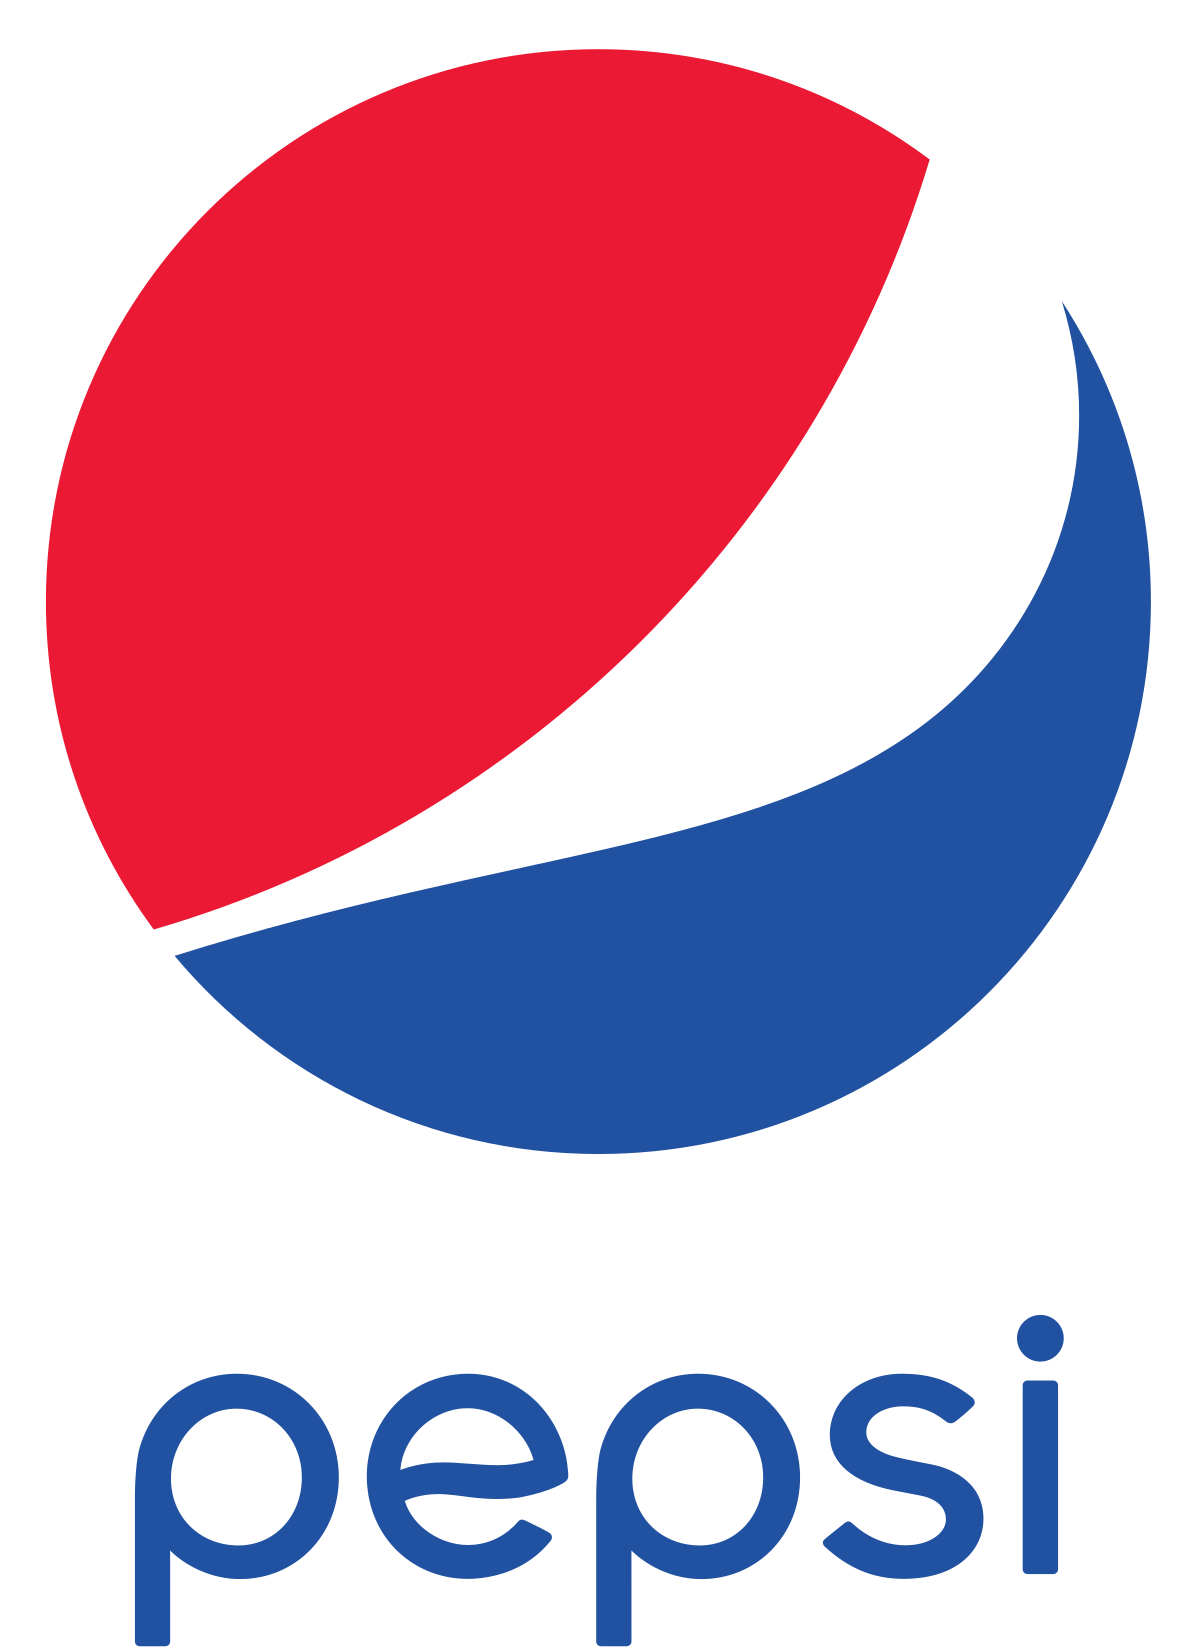 Pepsi - logo